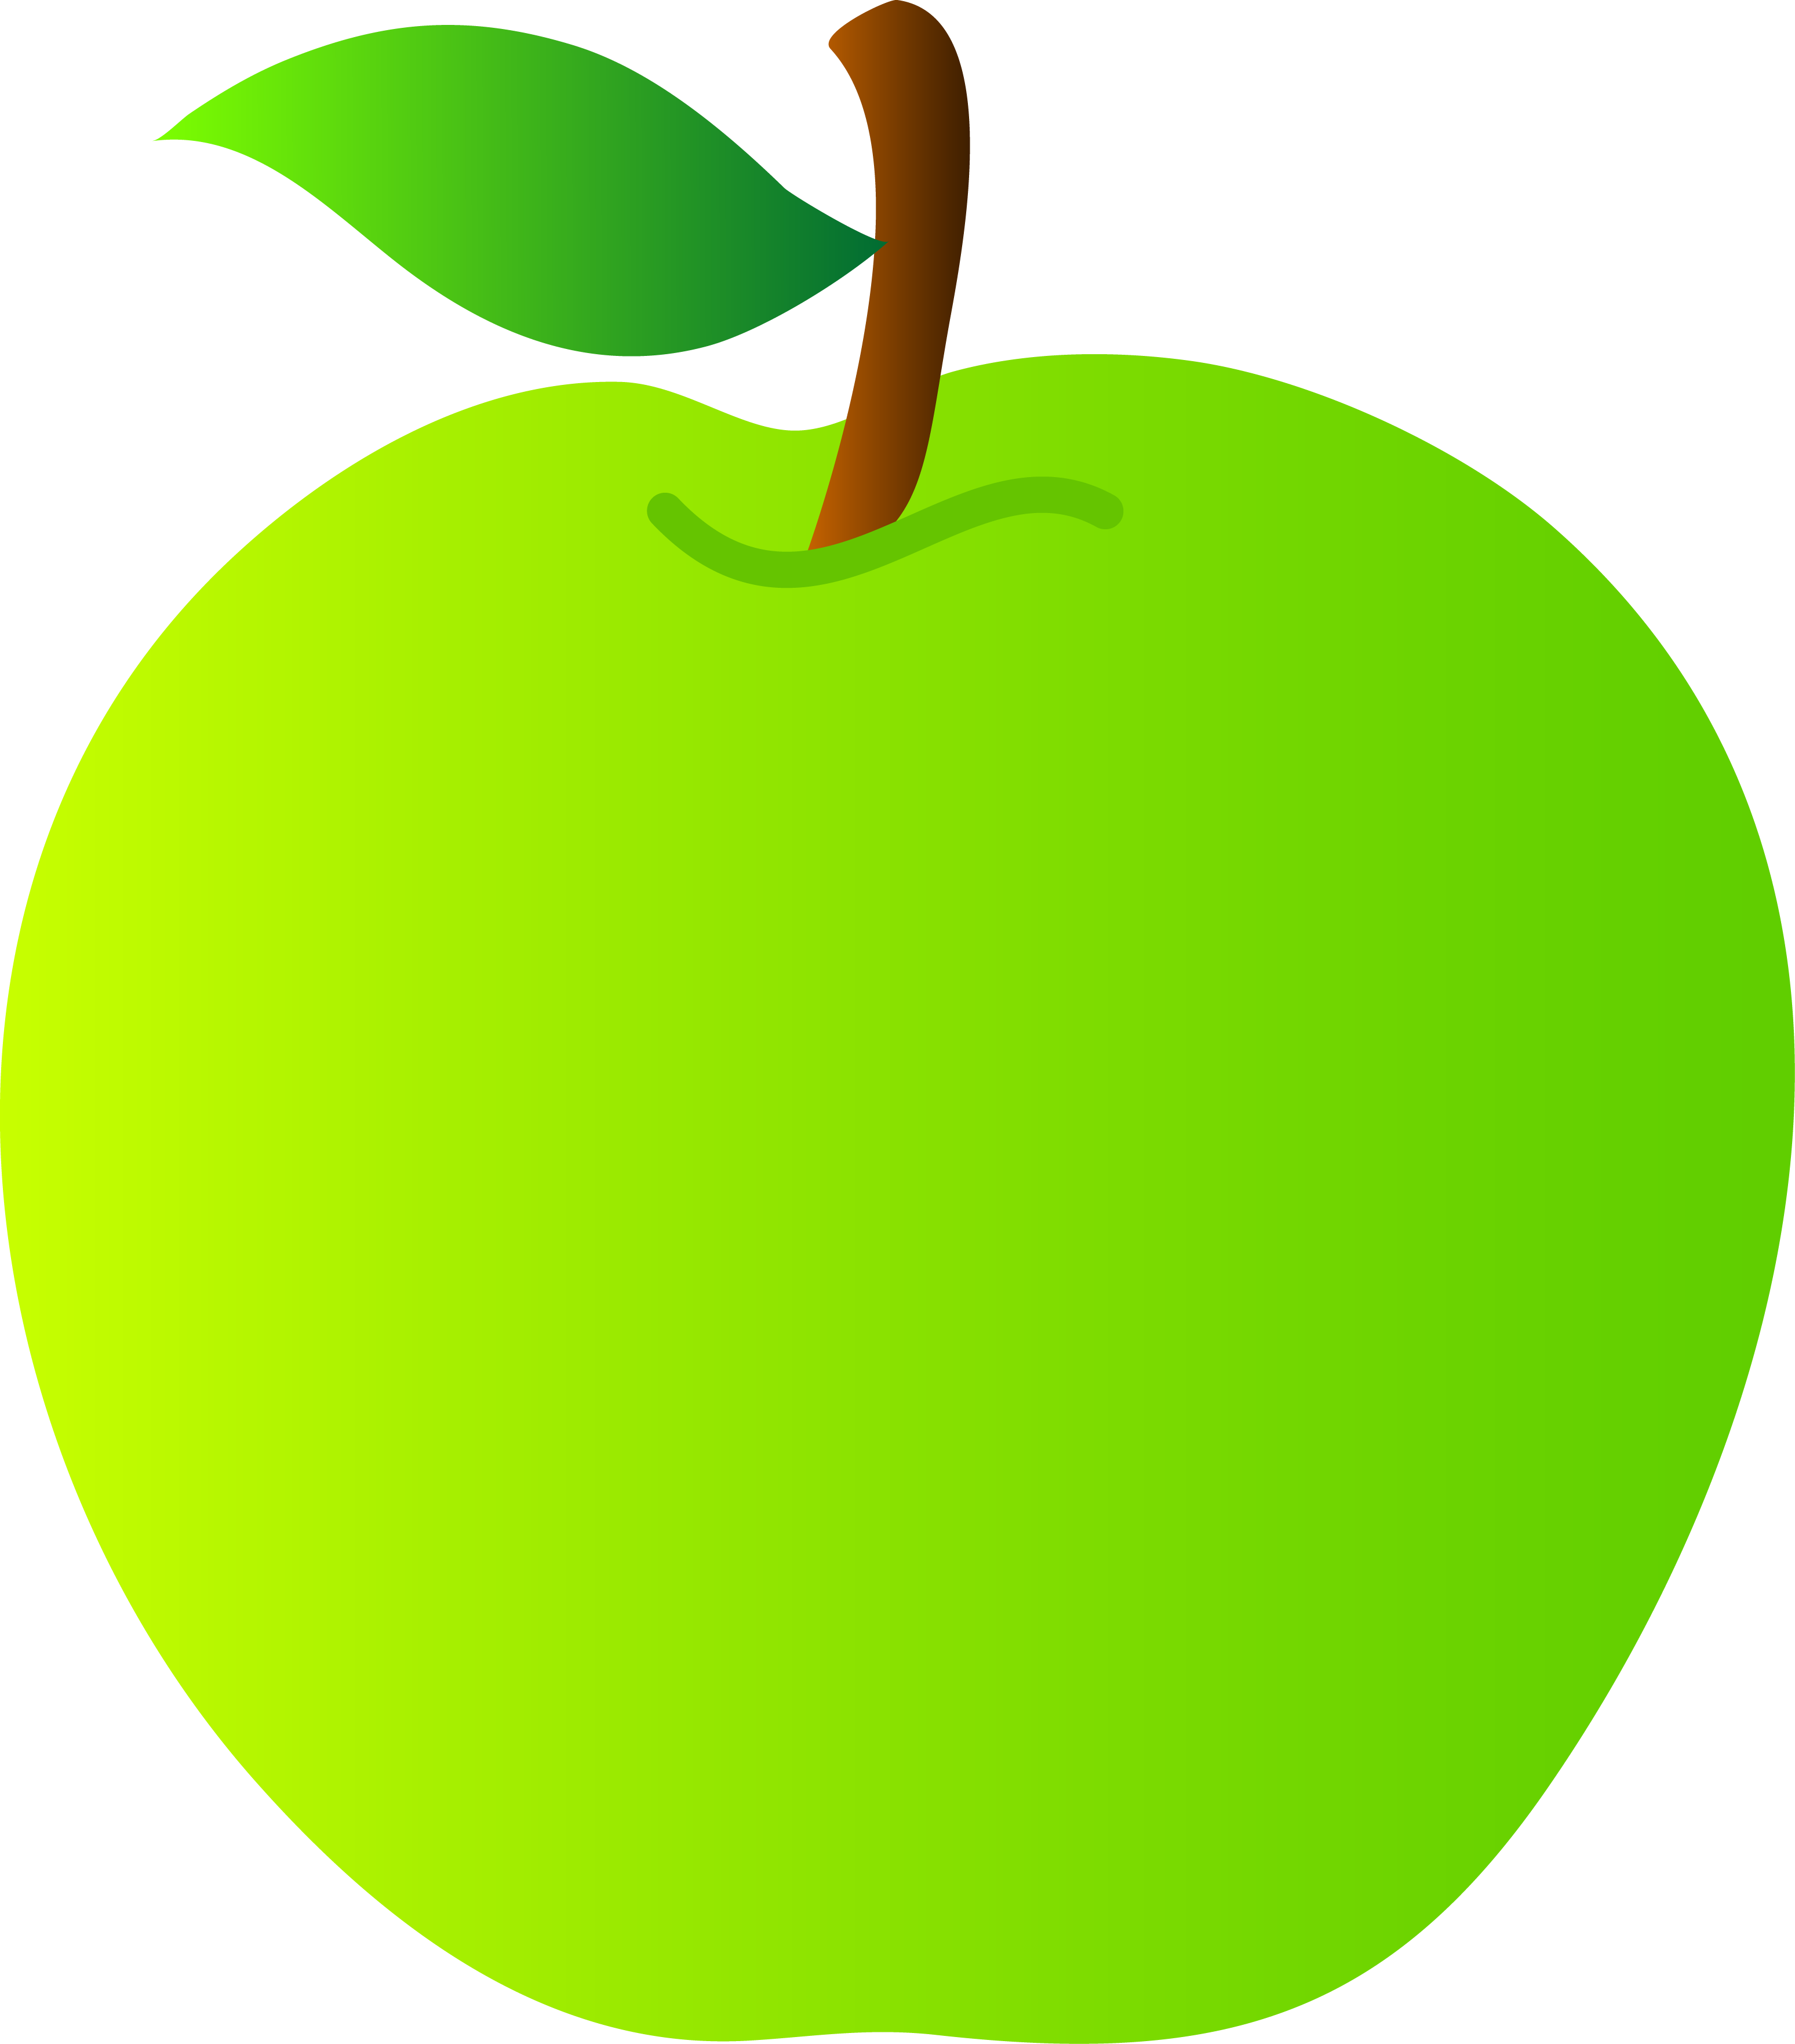 fruits clipart star apple